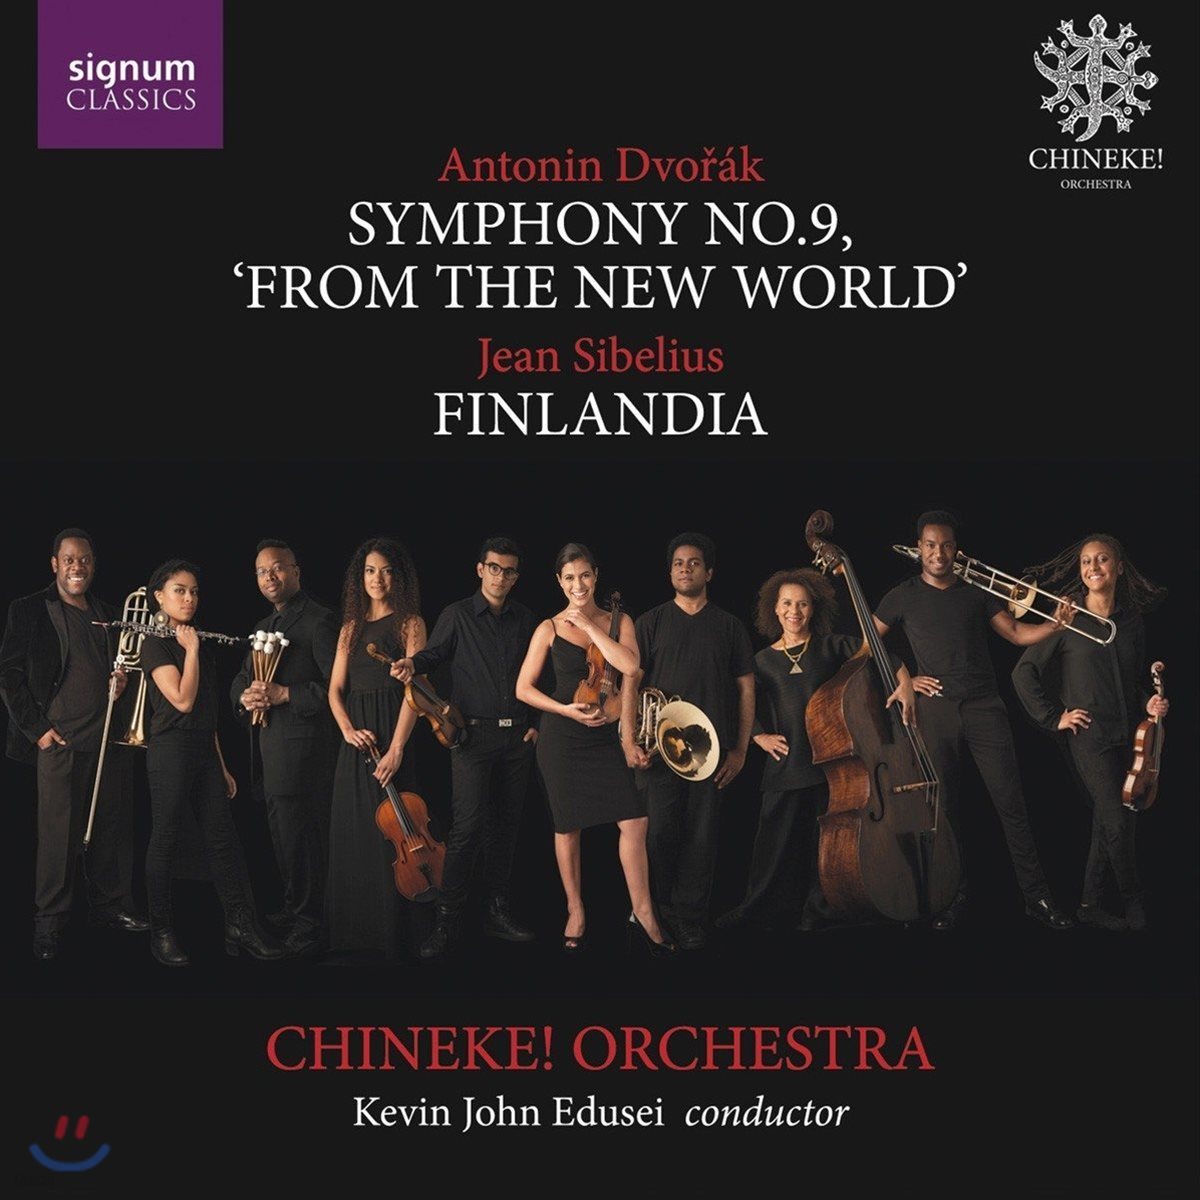 Chineke! Orchestra 드보르작: 교향곡 9번 '신세계로부터' / 시벨리우스: 핀란디아 - 치네케! 오케스트라 (Dvorak: Symphony 'From the New World' / Sibelius: Finlandia)